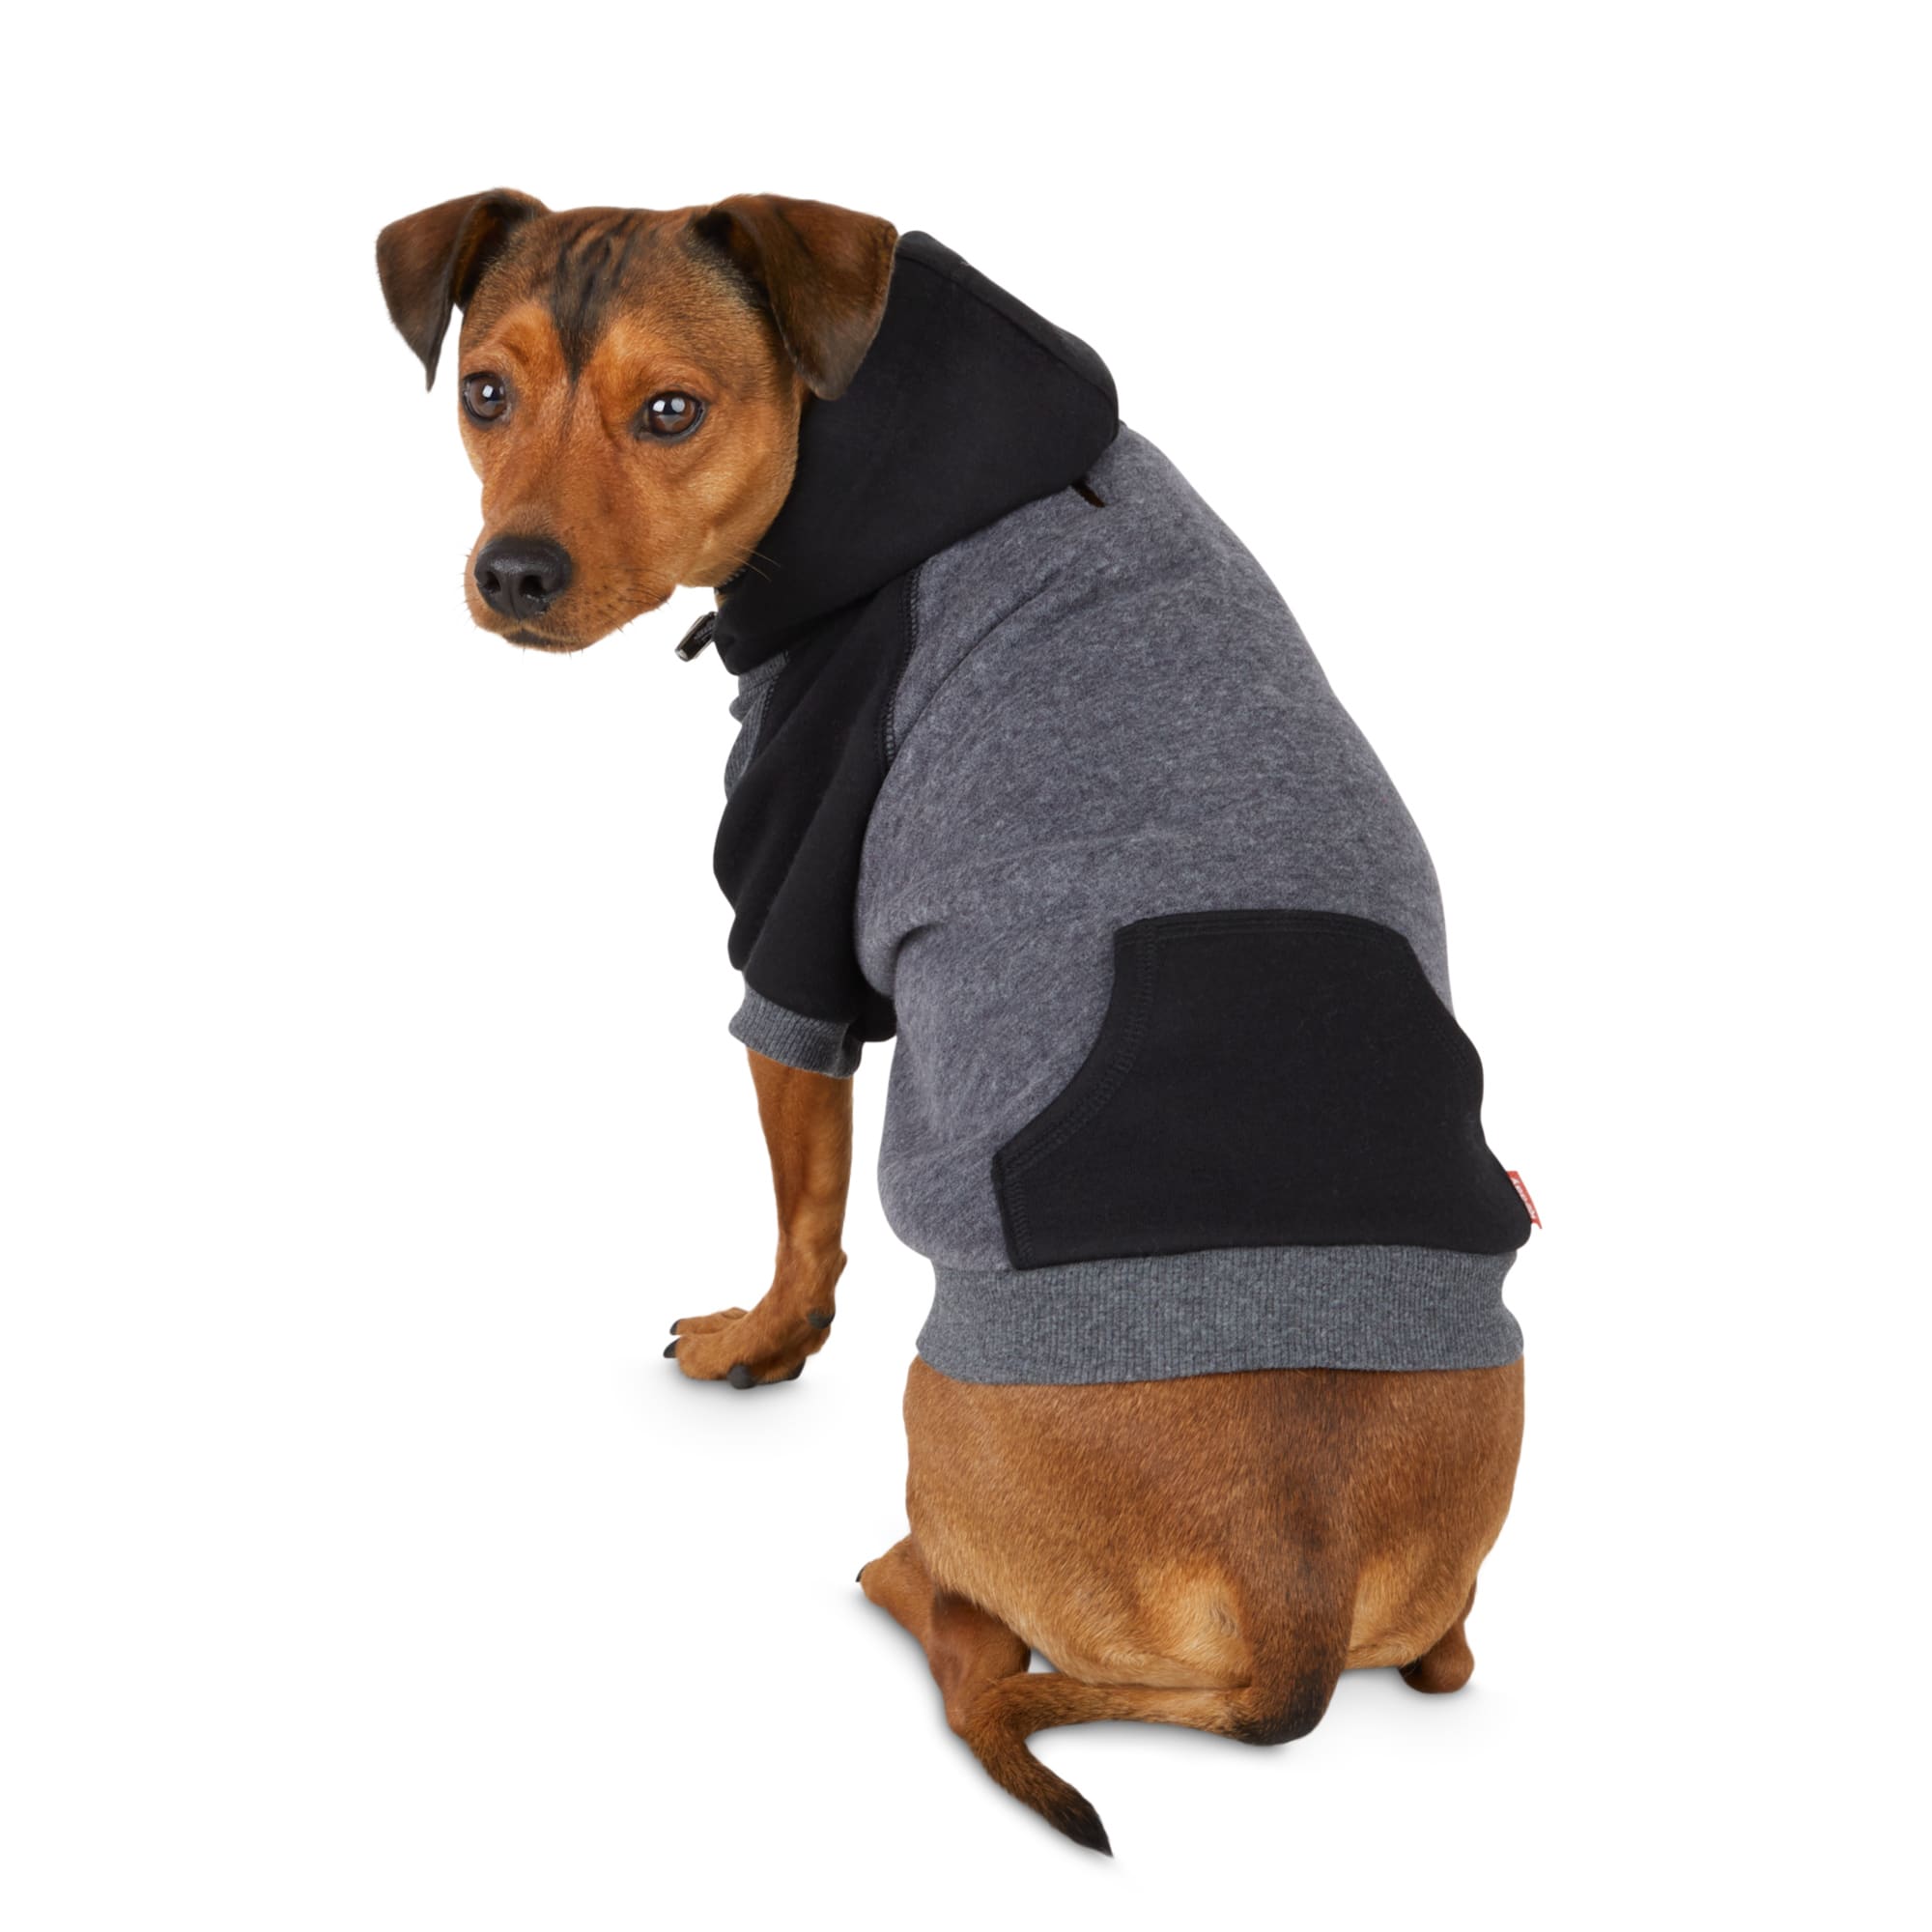 6XL, Grey Adidog Dog Hoodies,Rdc Pet Clothes,Fleece Basic Hoodie Warm Sweater,4 Legs Cotton Jacket Sweat Shirt Coat for Small Dog Medium Dog Cat